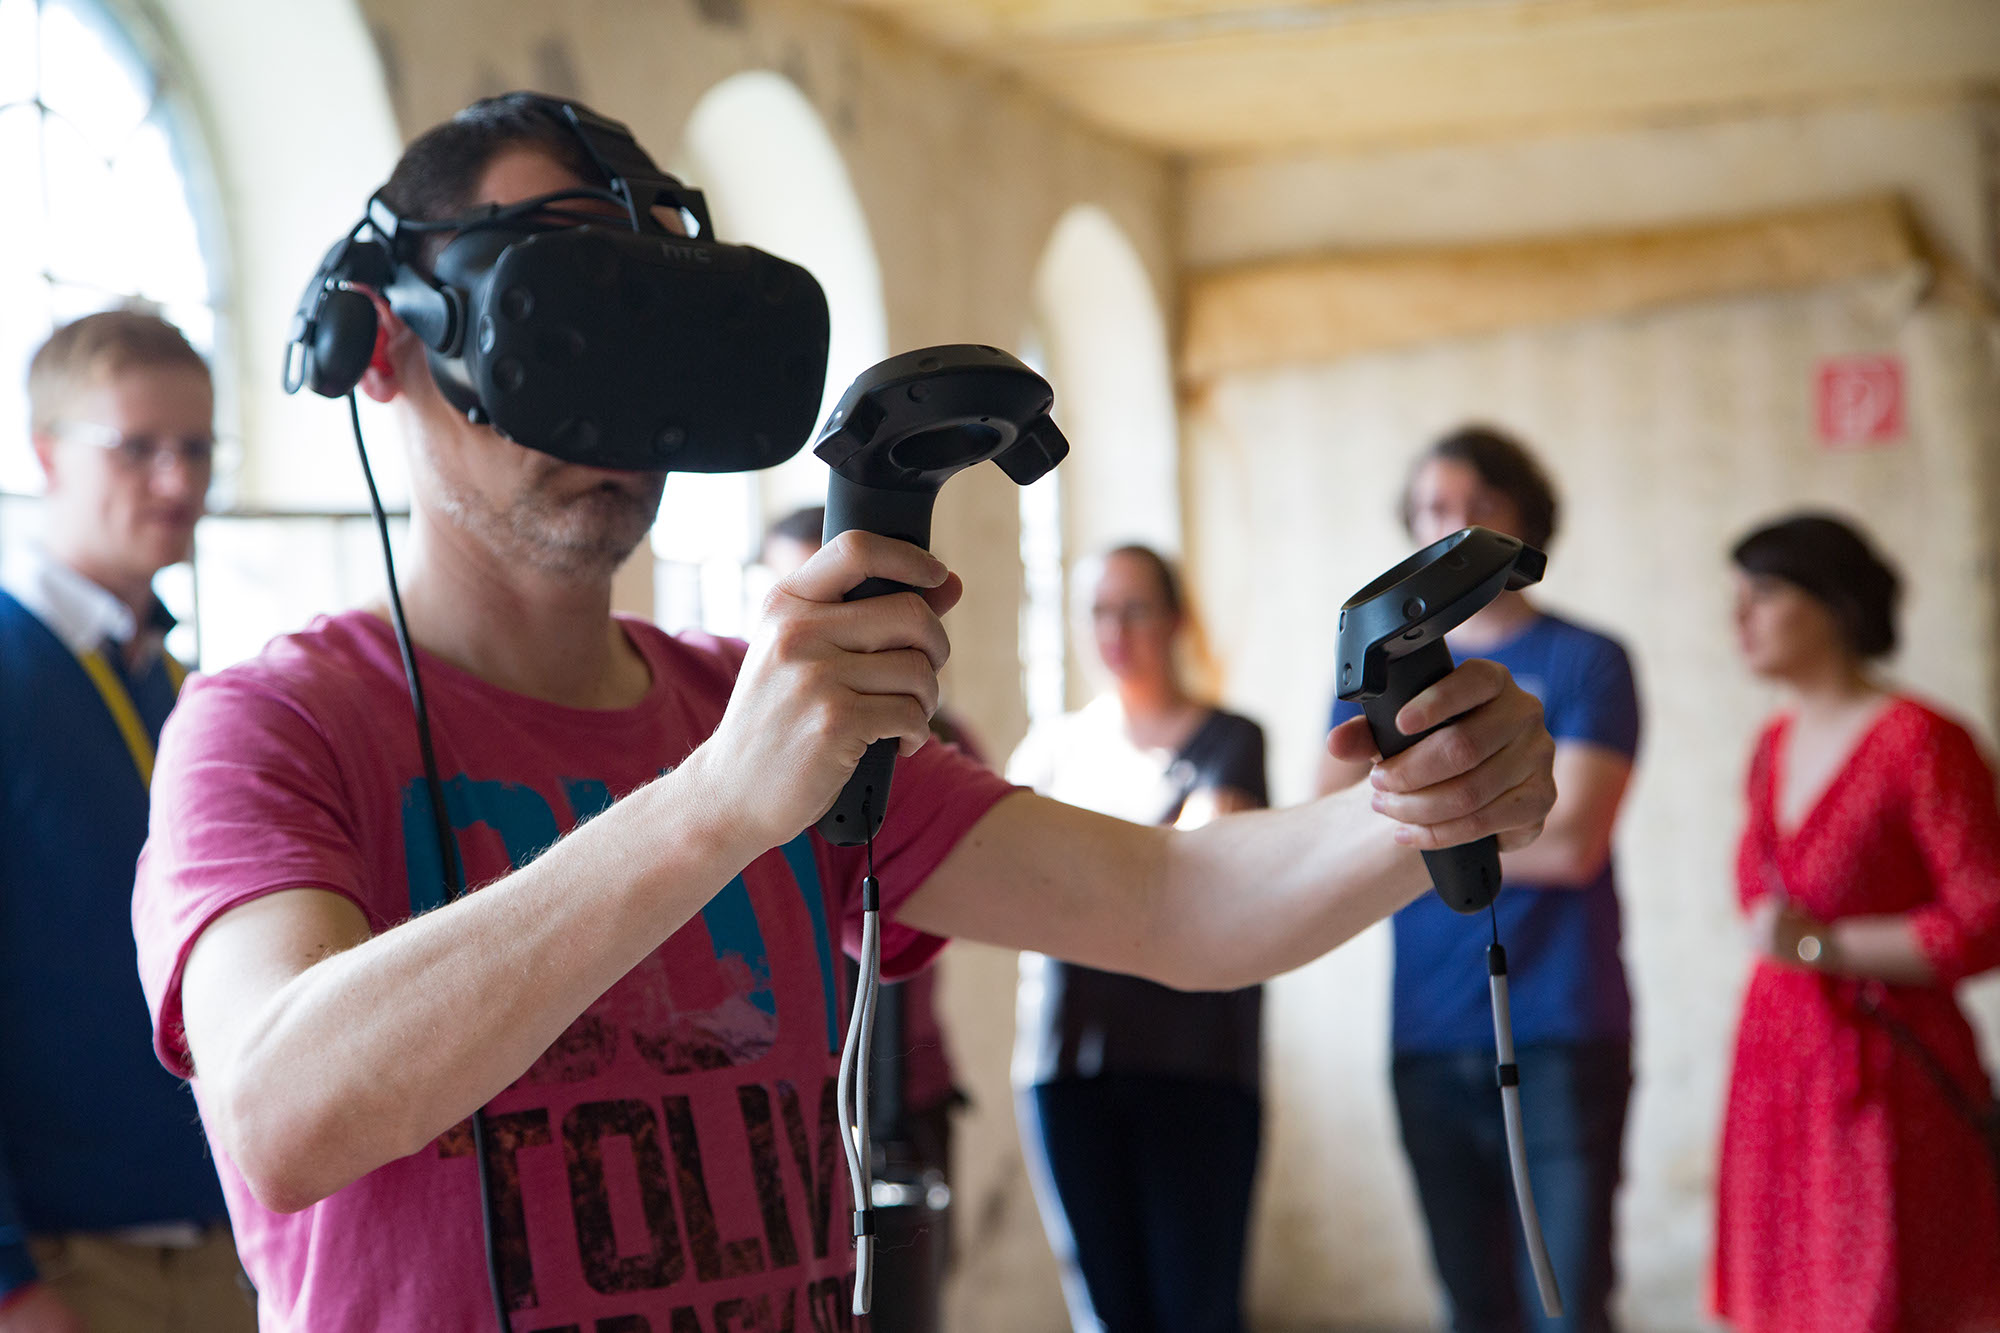 Places Festival: Virtual Reality